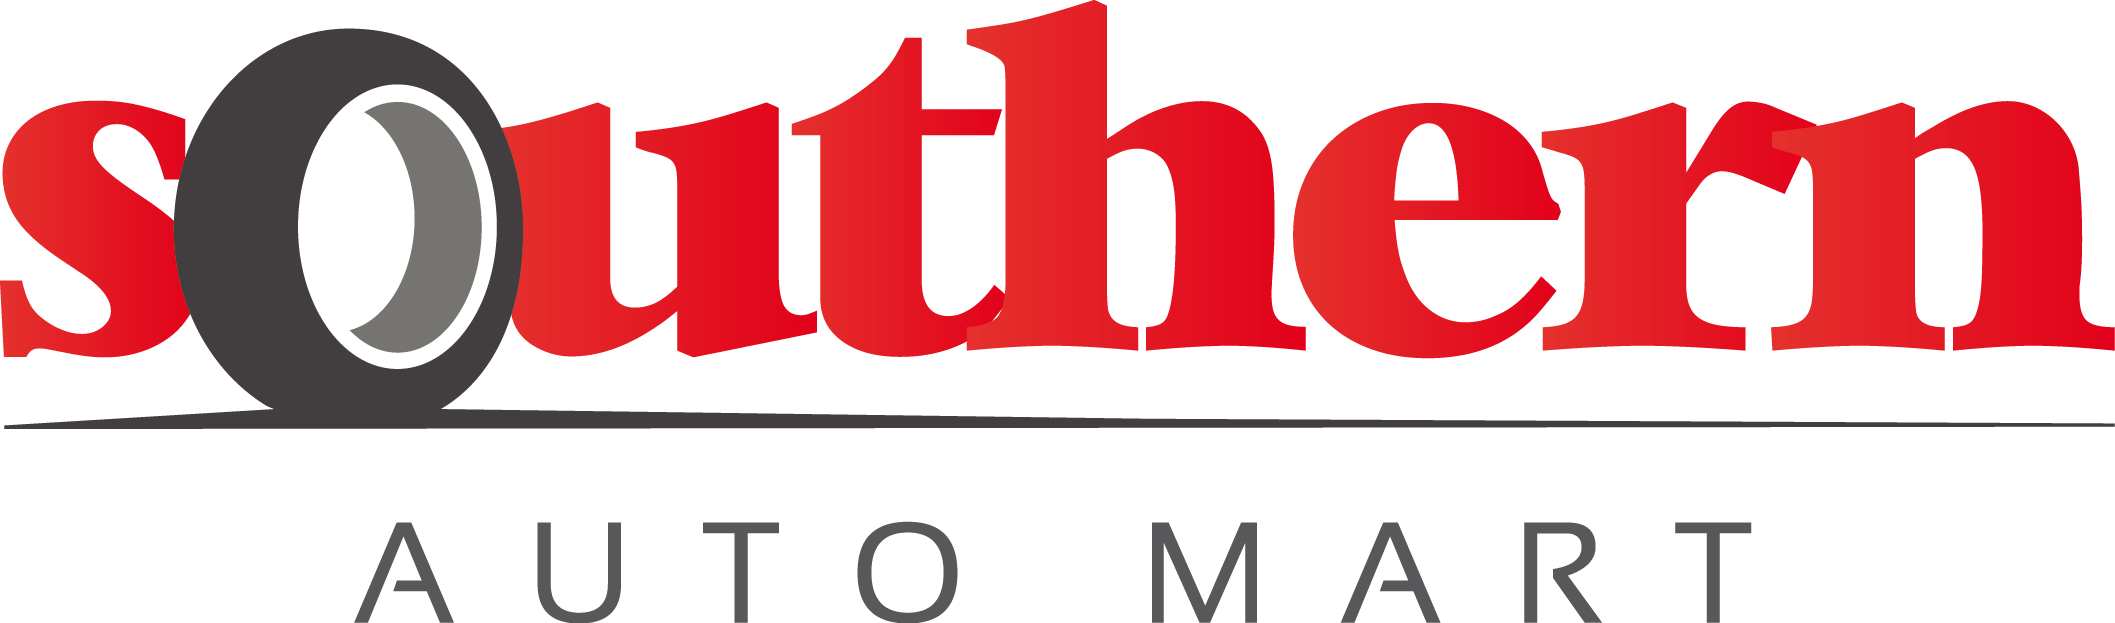 Southern Auto Mart, Inc'